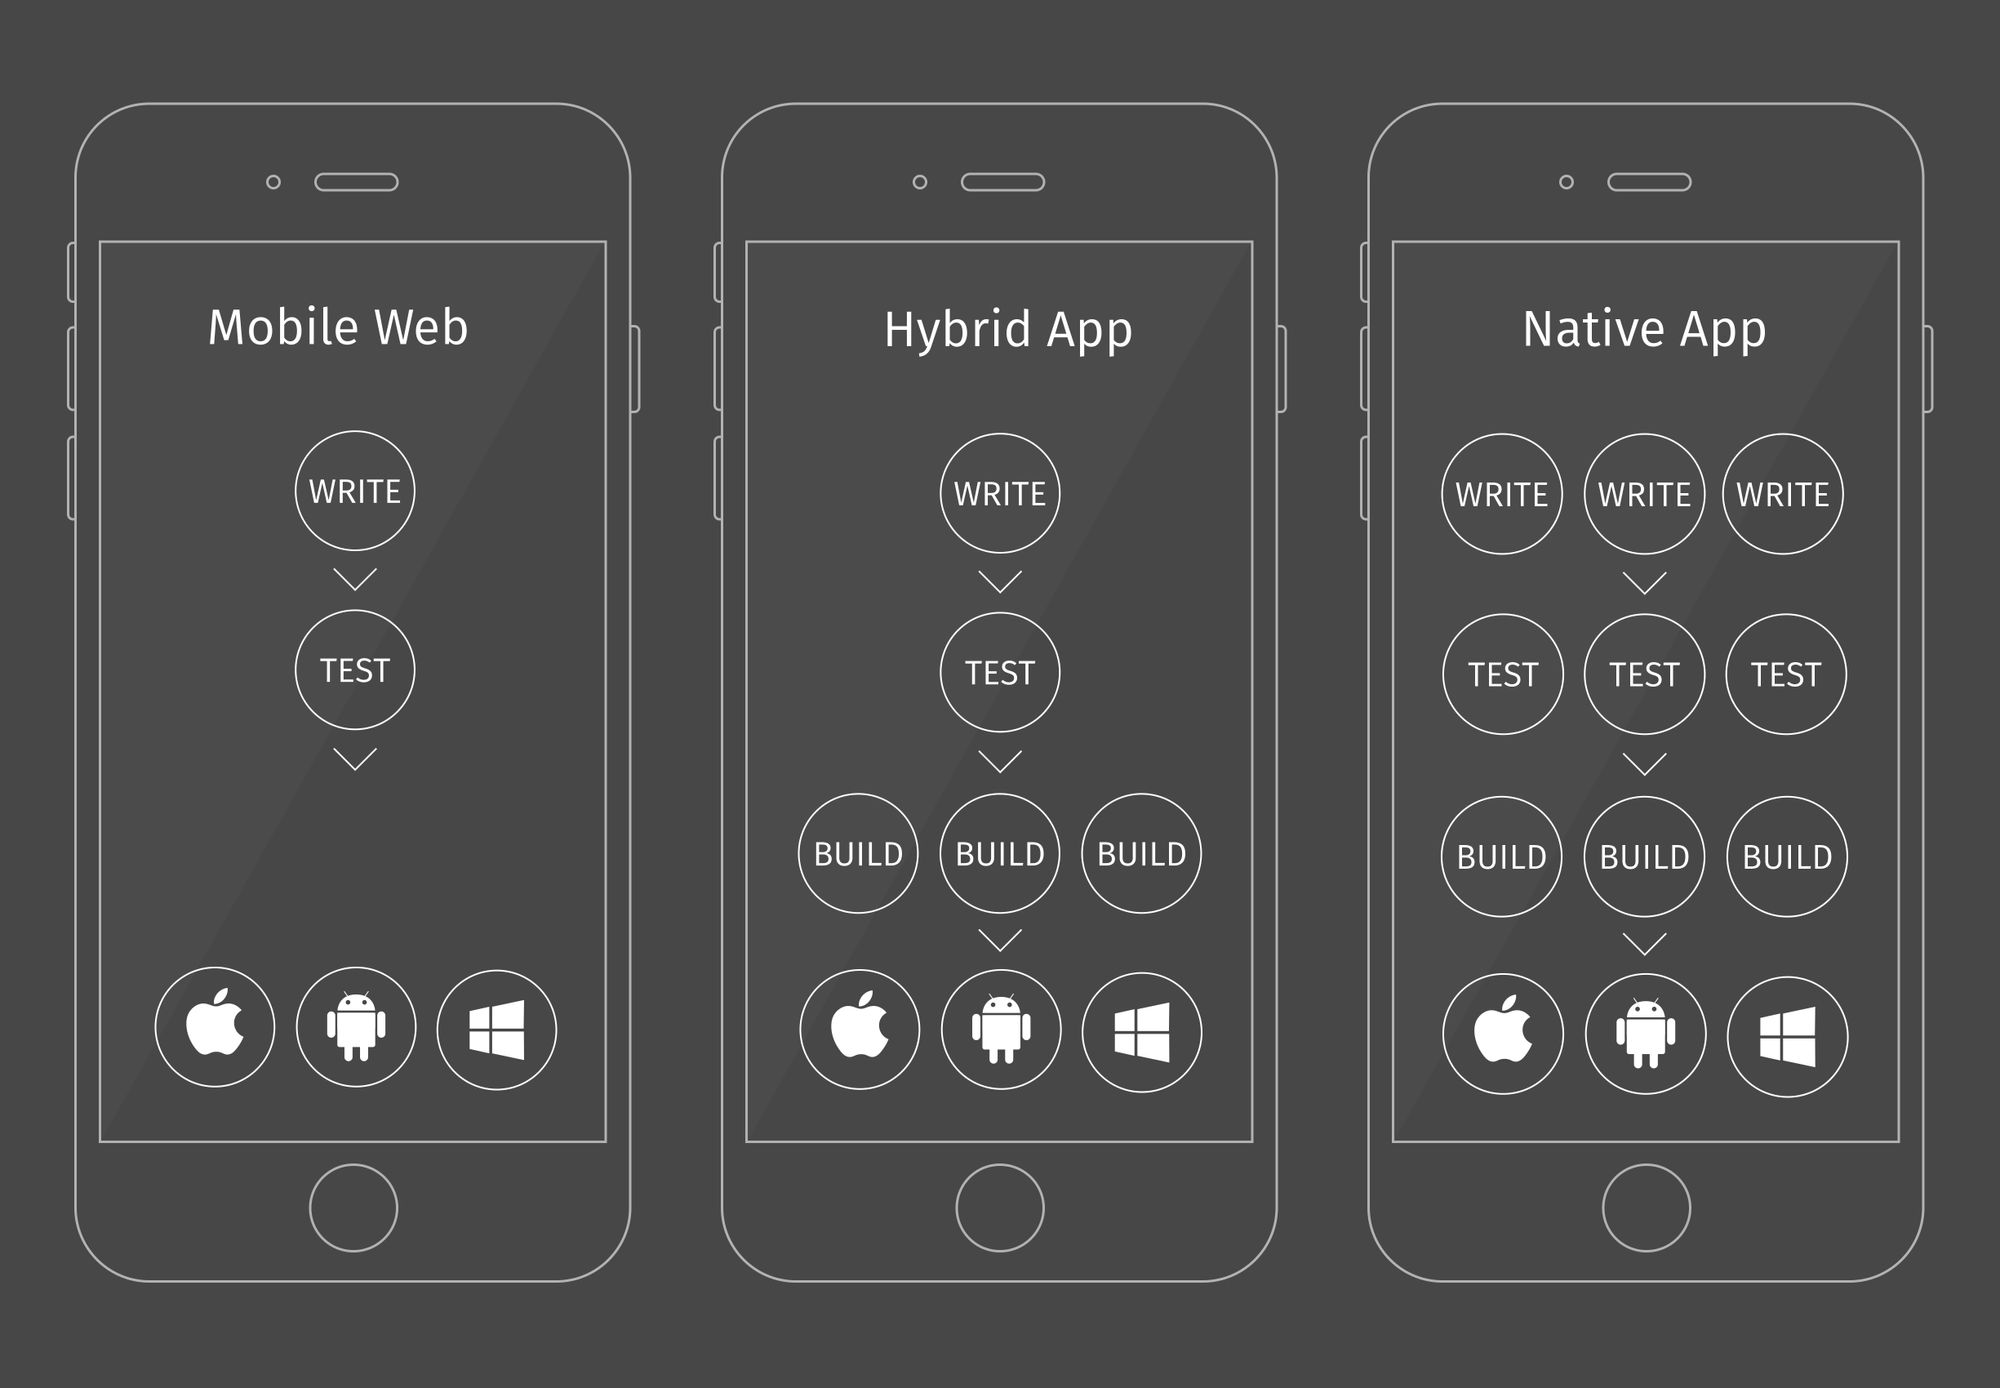 Mobile Web vs. Hybrid vs. Native: Die Komplexität variiert erheblich